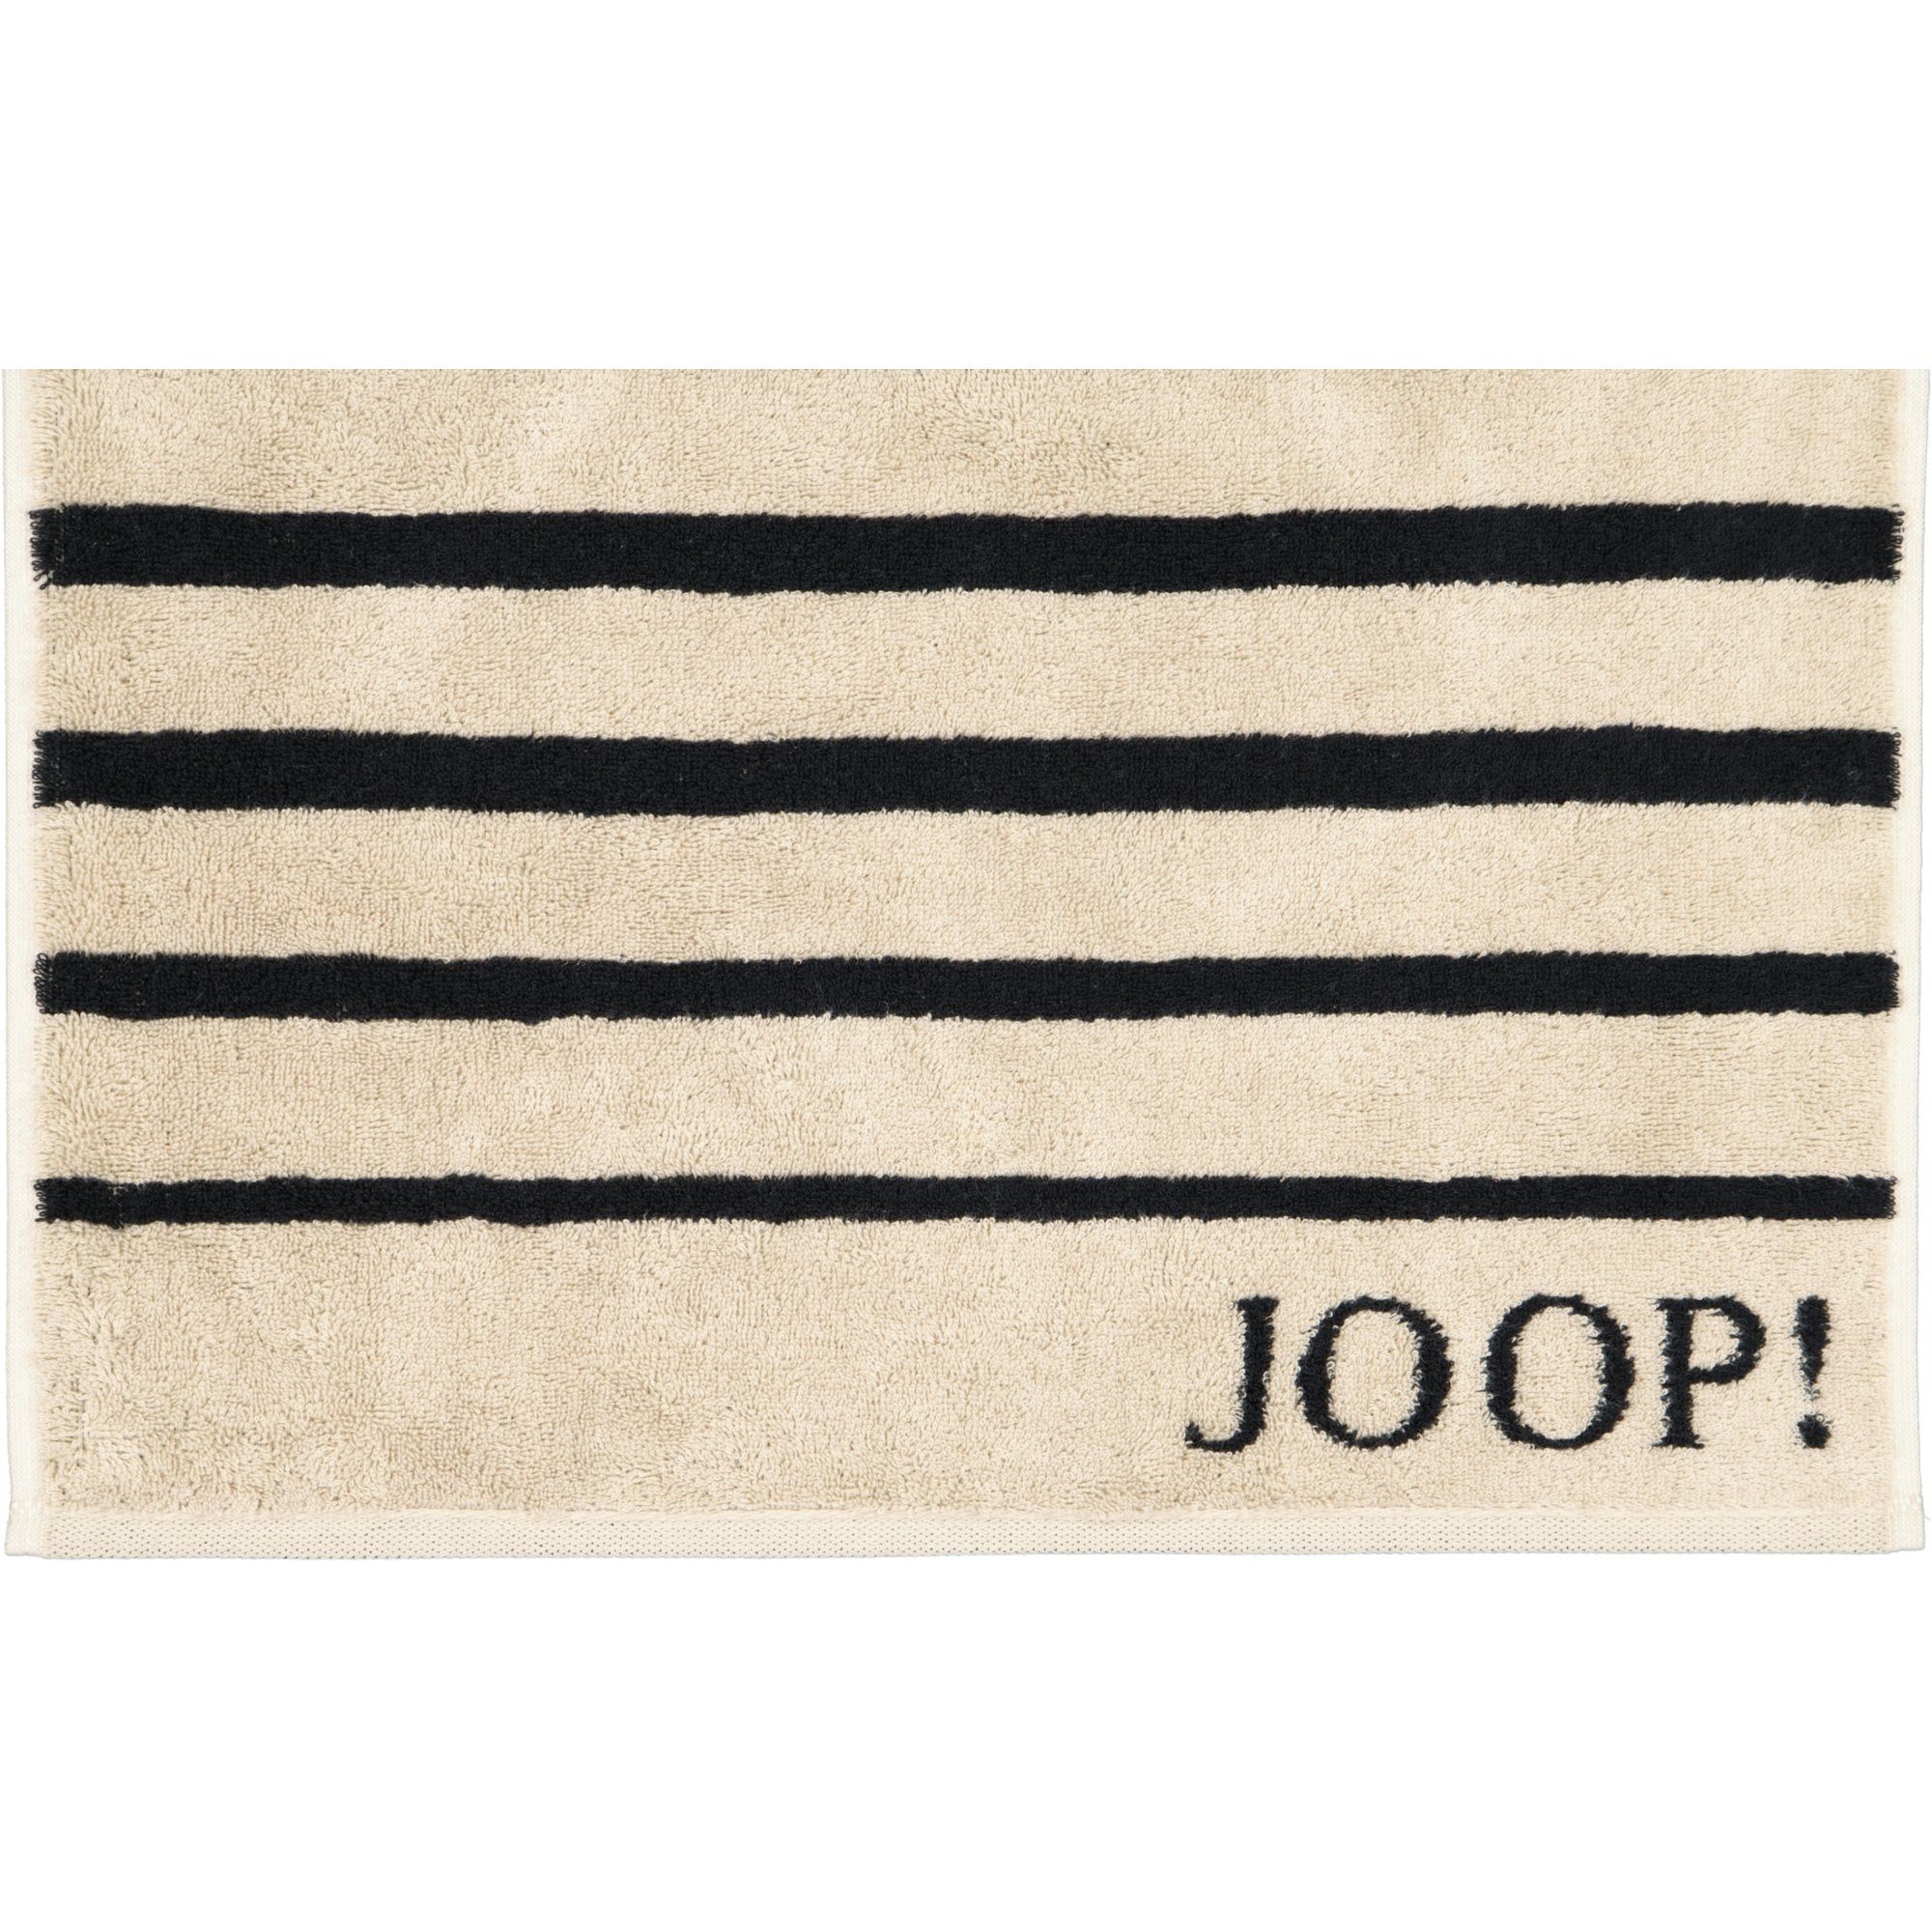 Joop! Handtücher Baumwolle ebony Select 100% Shade 1694